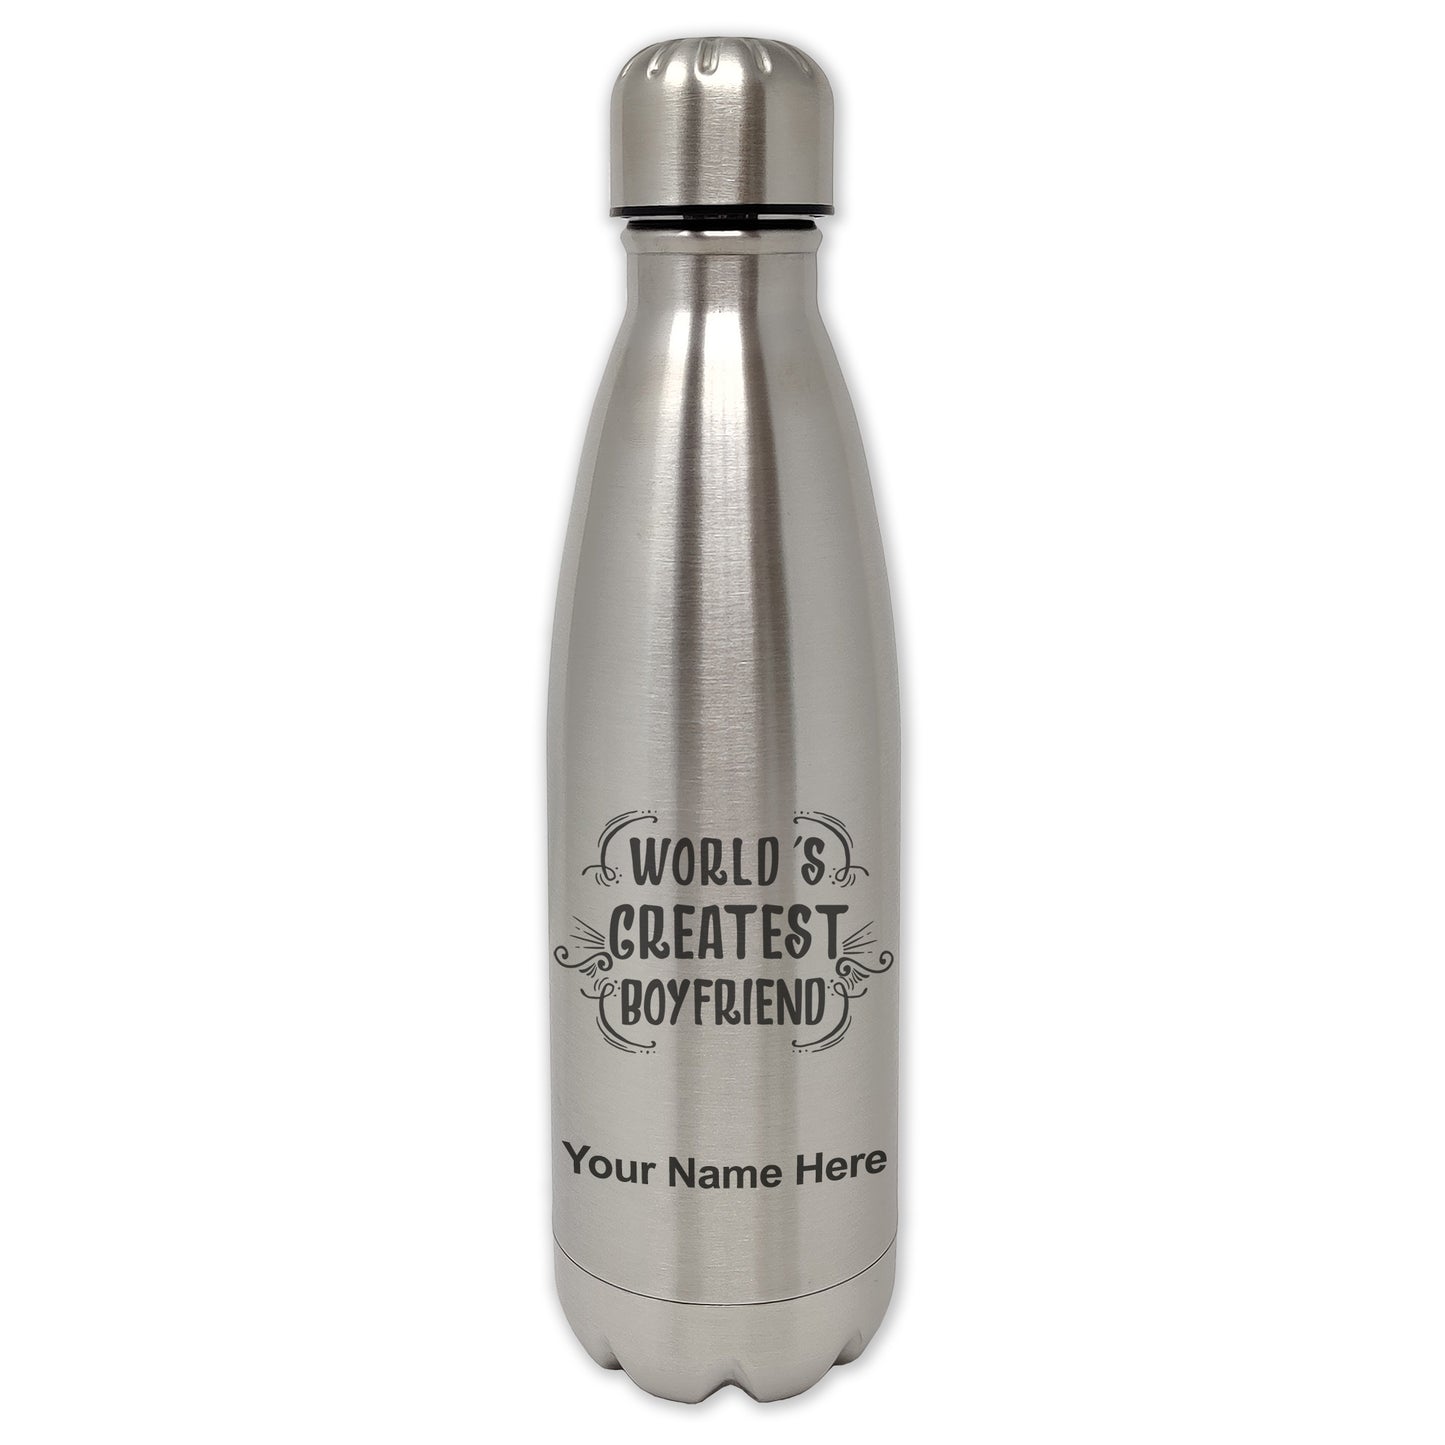 LaserGram Double Wall Water Bottle, World's Greatest Boyfriend, Personalized Engraving Included